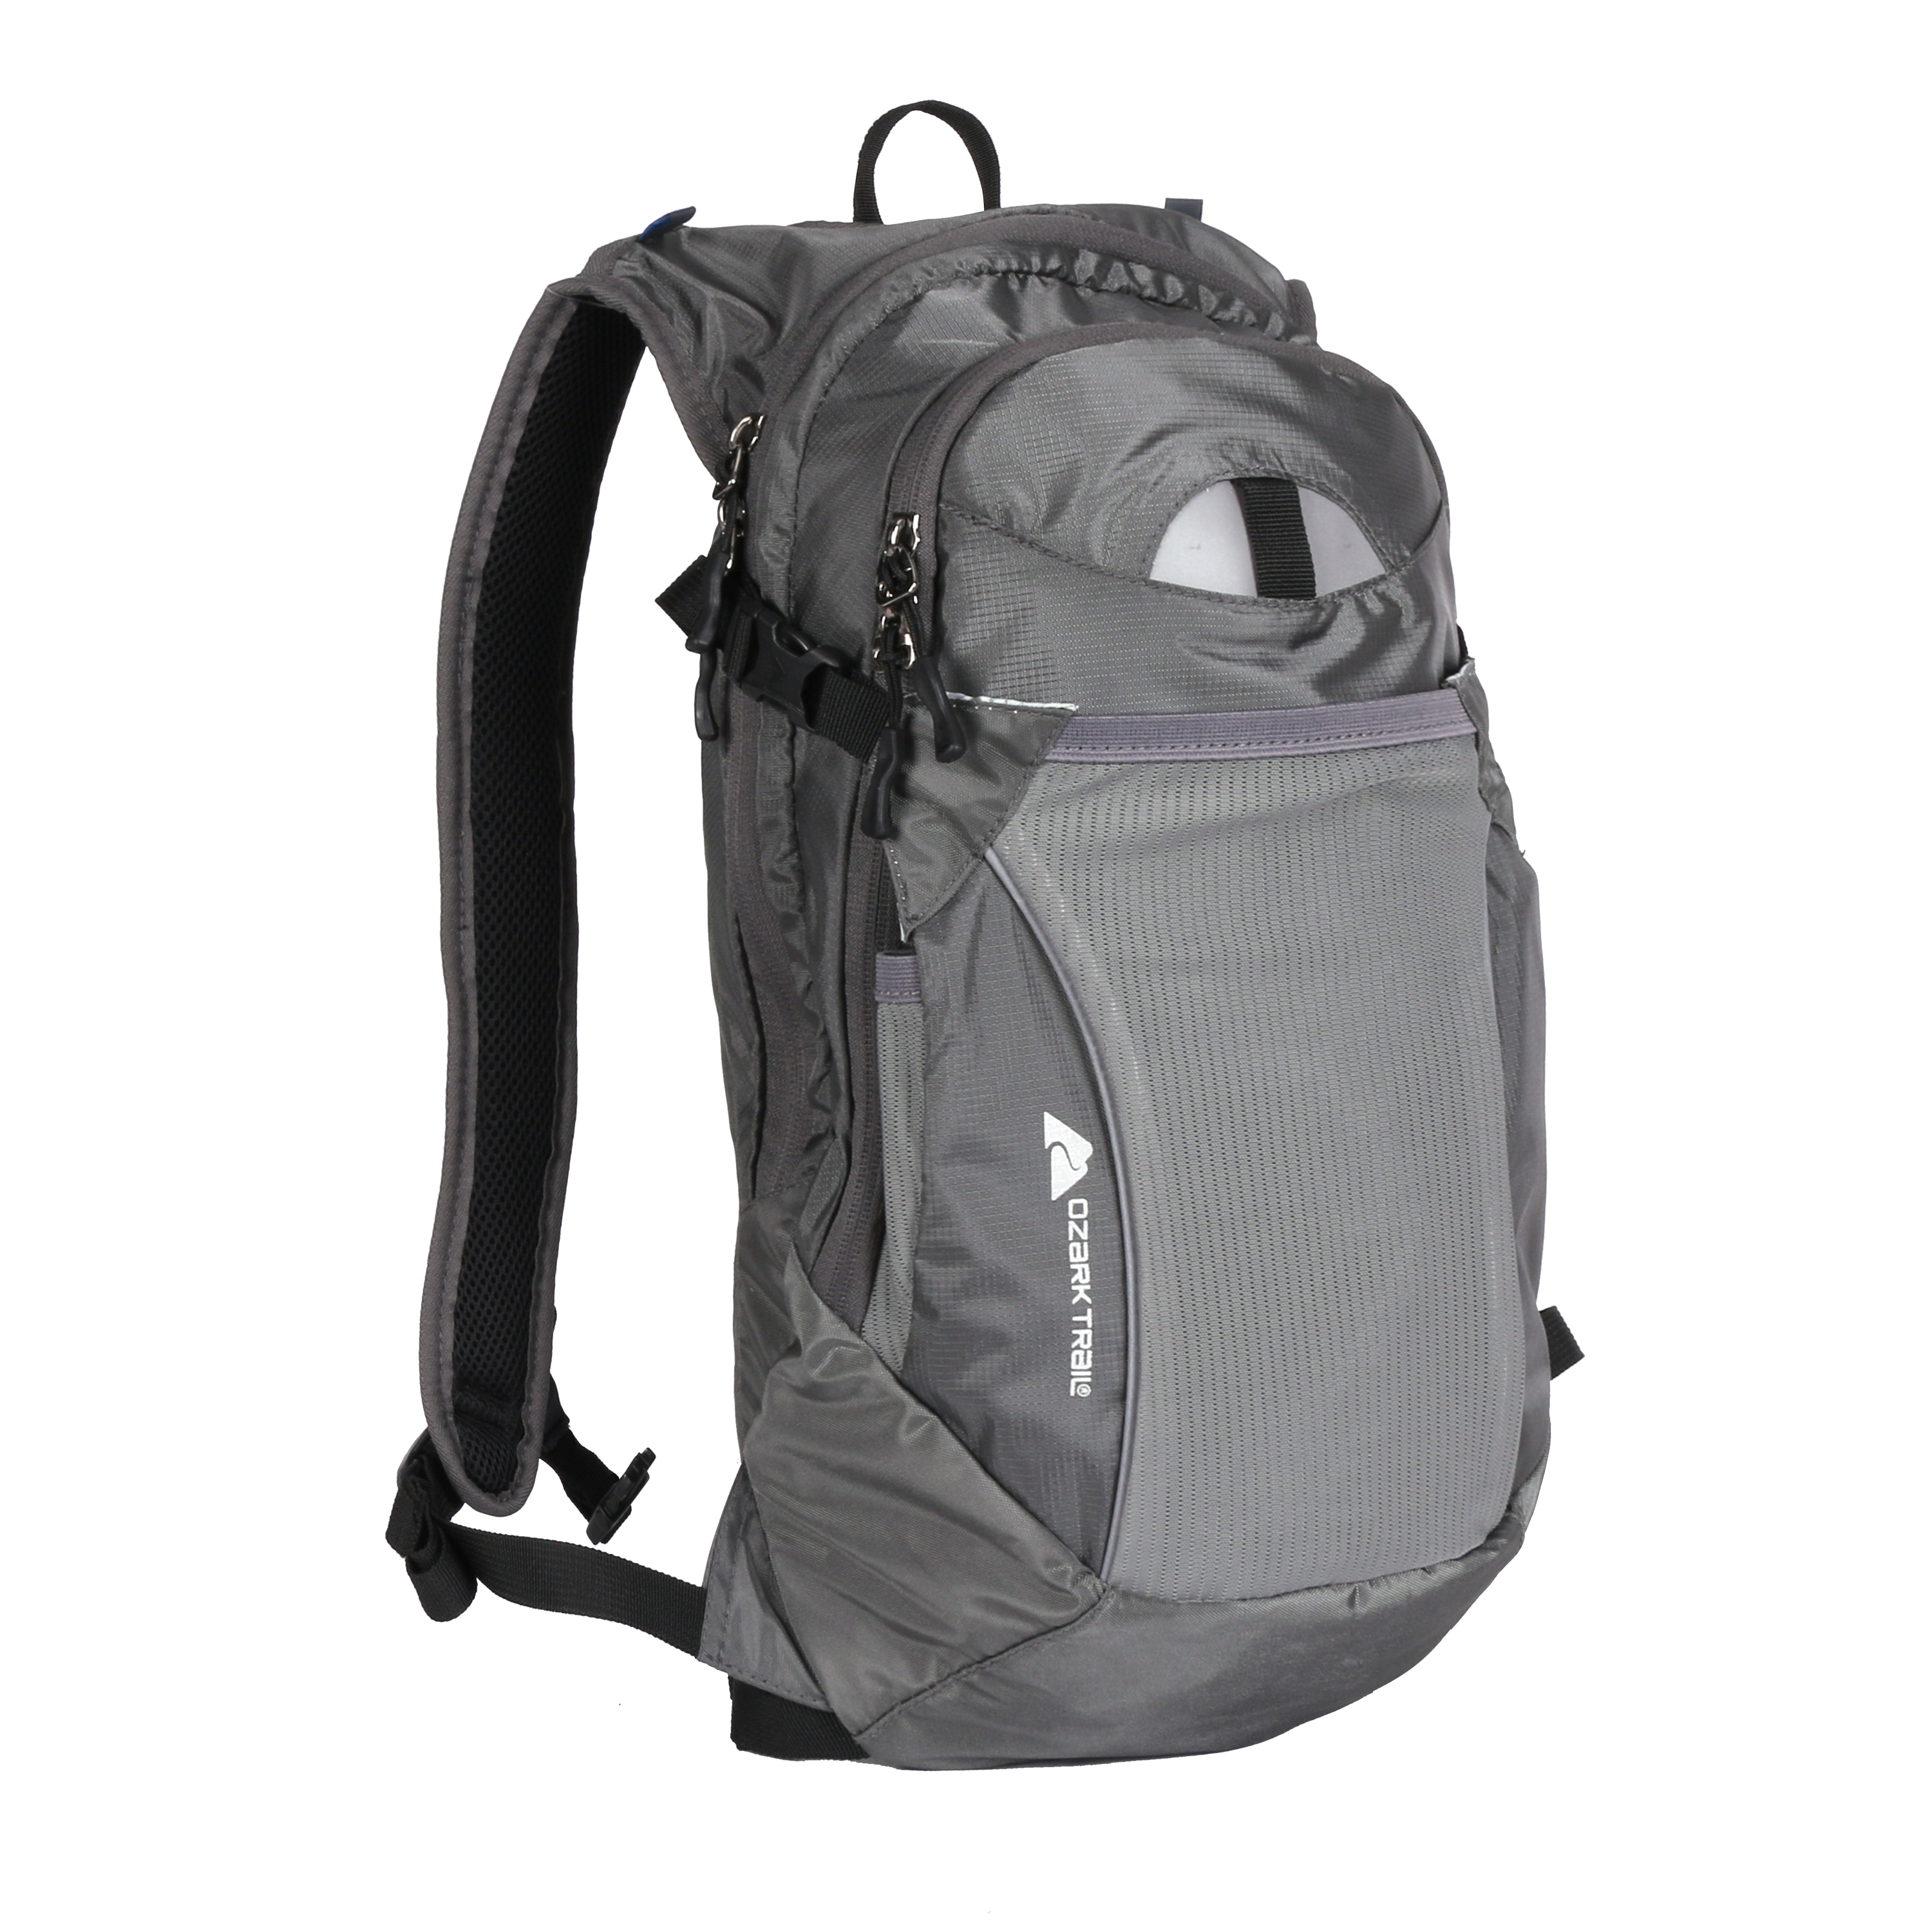 Ozark Trail 17 ltr, Backpacking Backpack, Gray - image 1 of 6